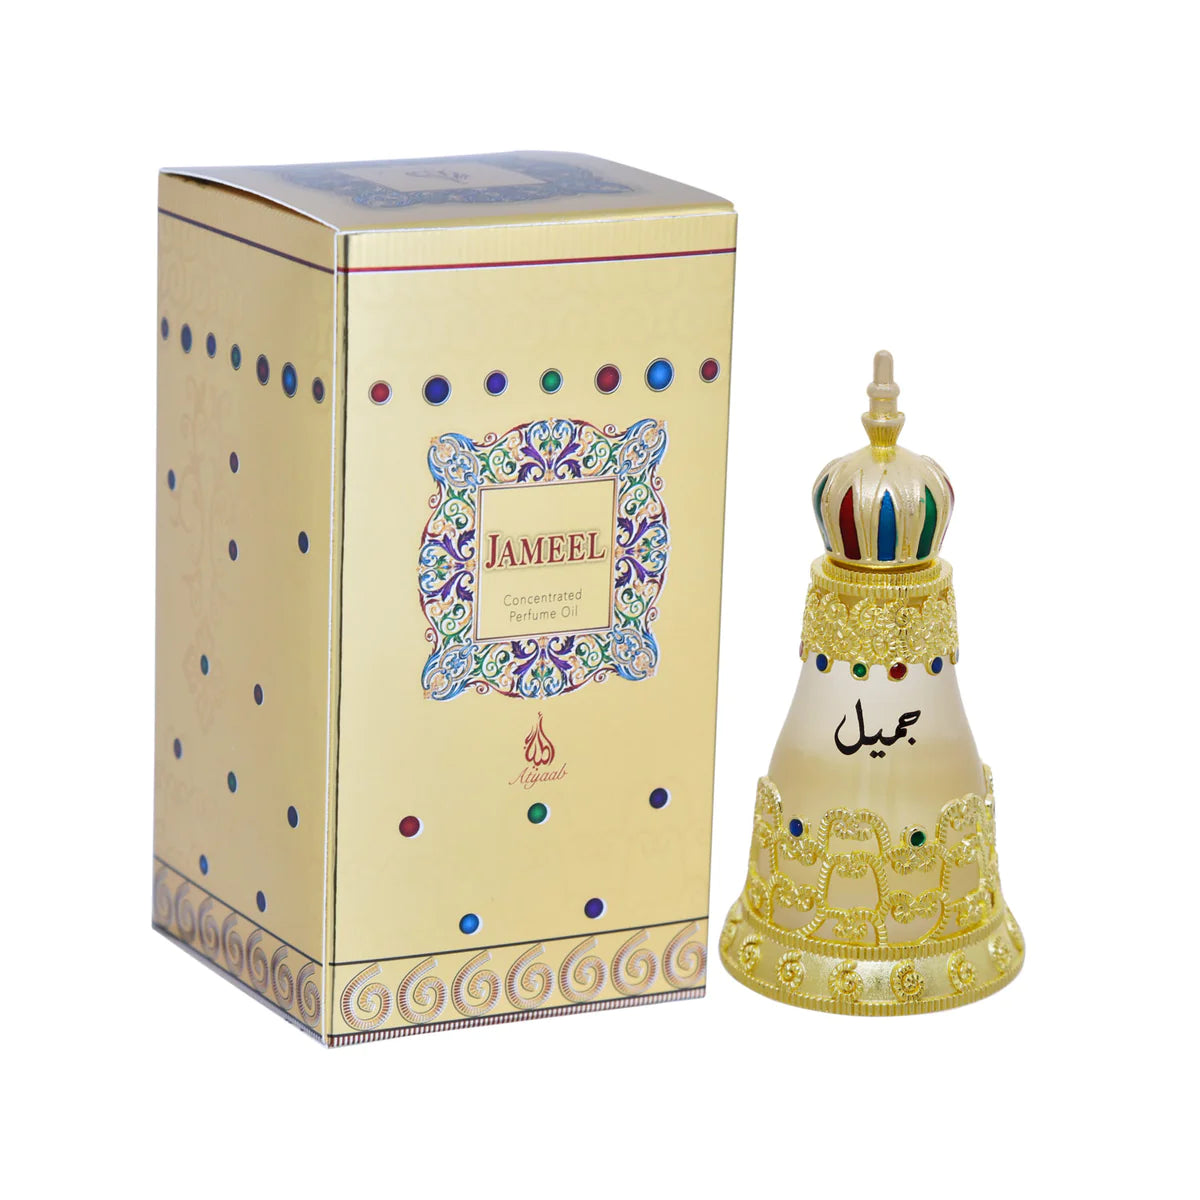 Jameel CPO (25ml) perfume oil by Khadlaj | Khan El Khalili